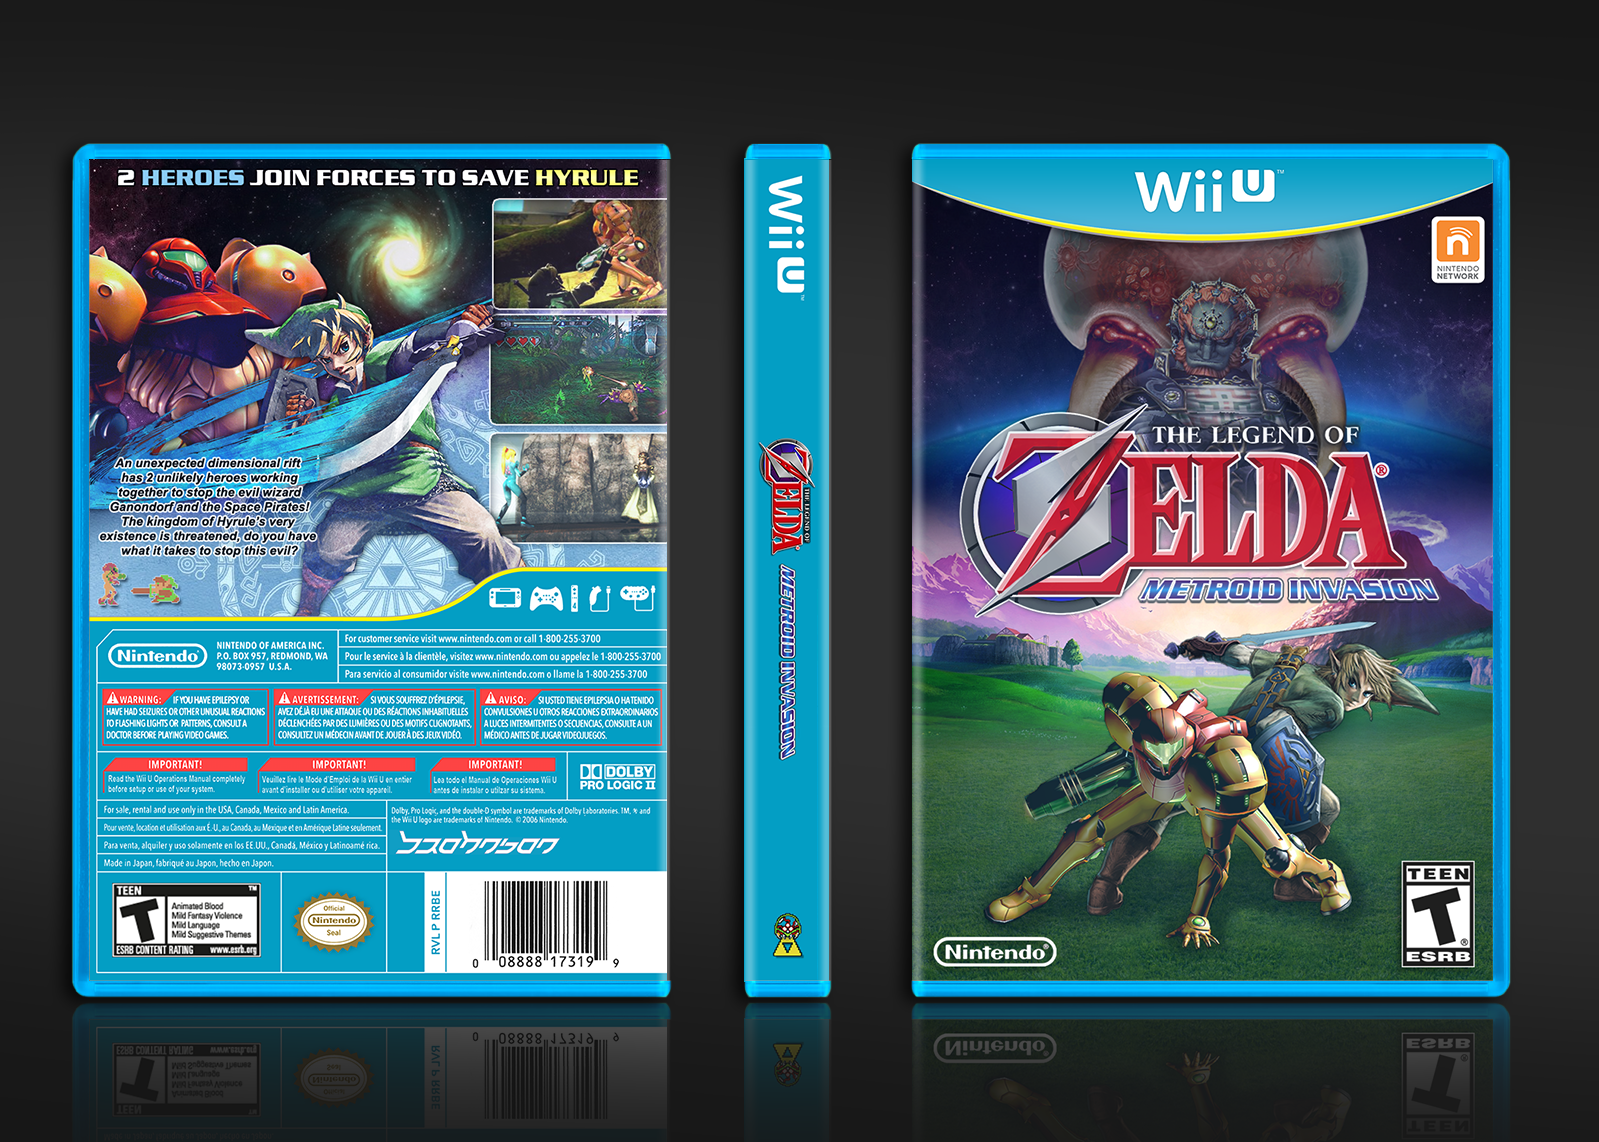 The Legend of Zelda: Metroid Invasion box cover